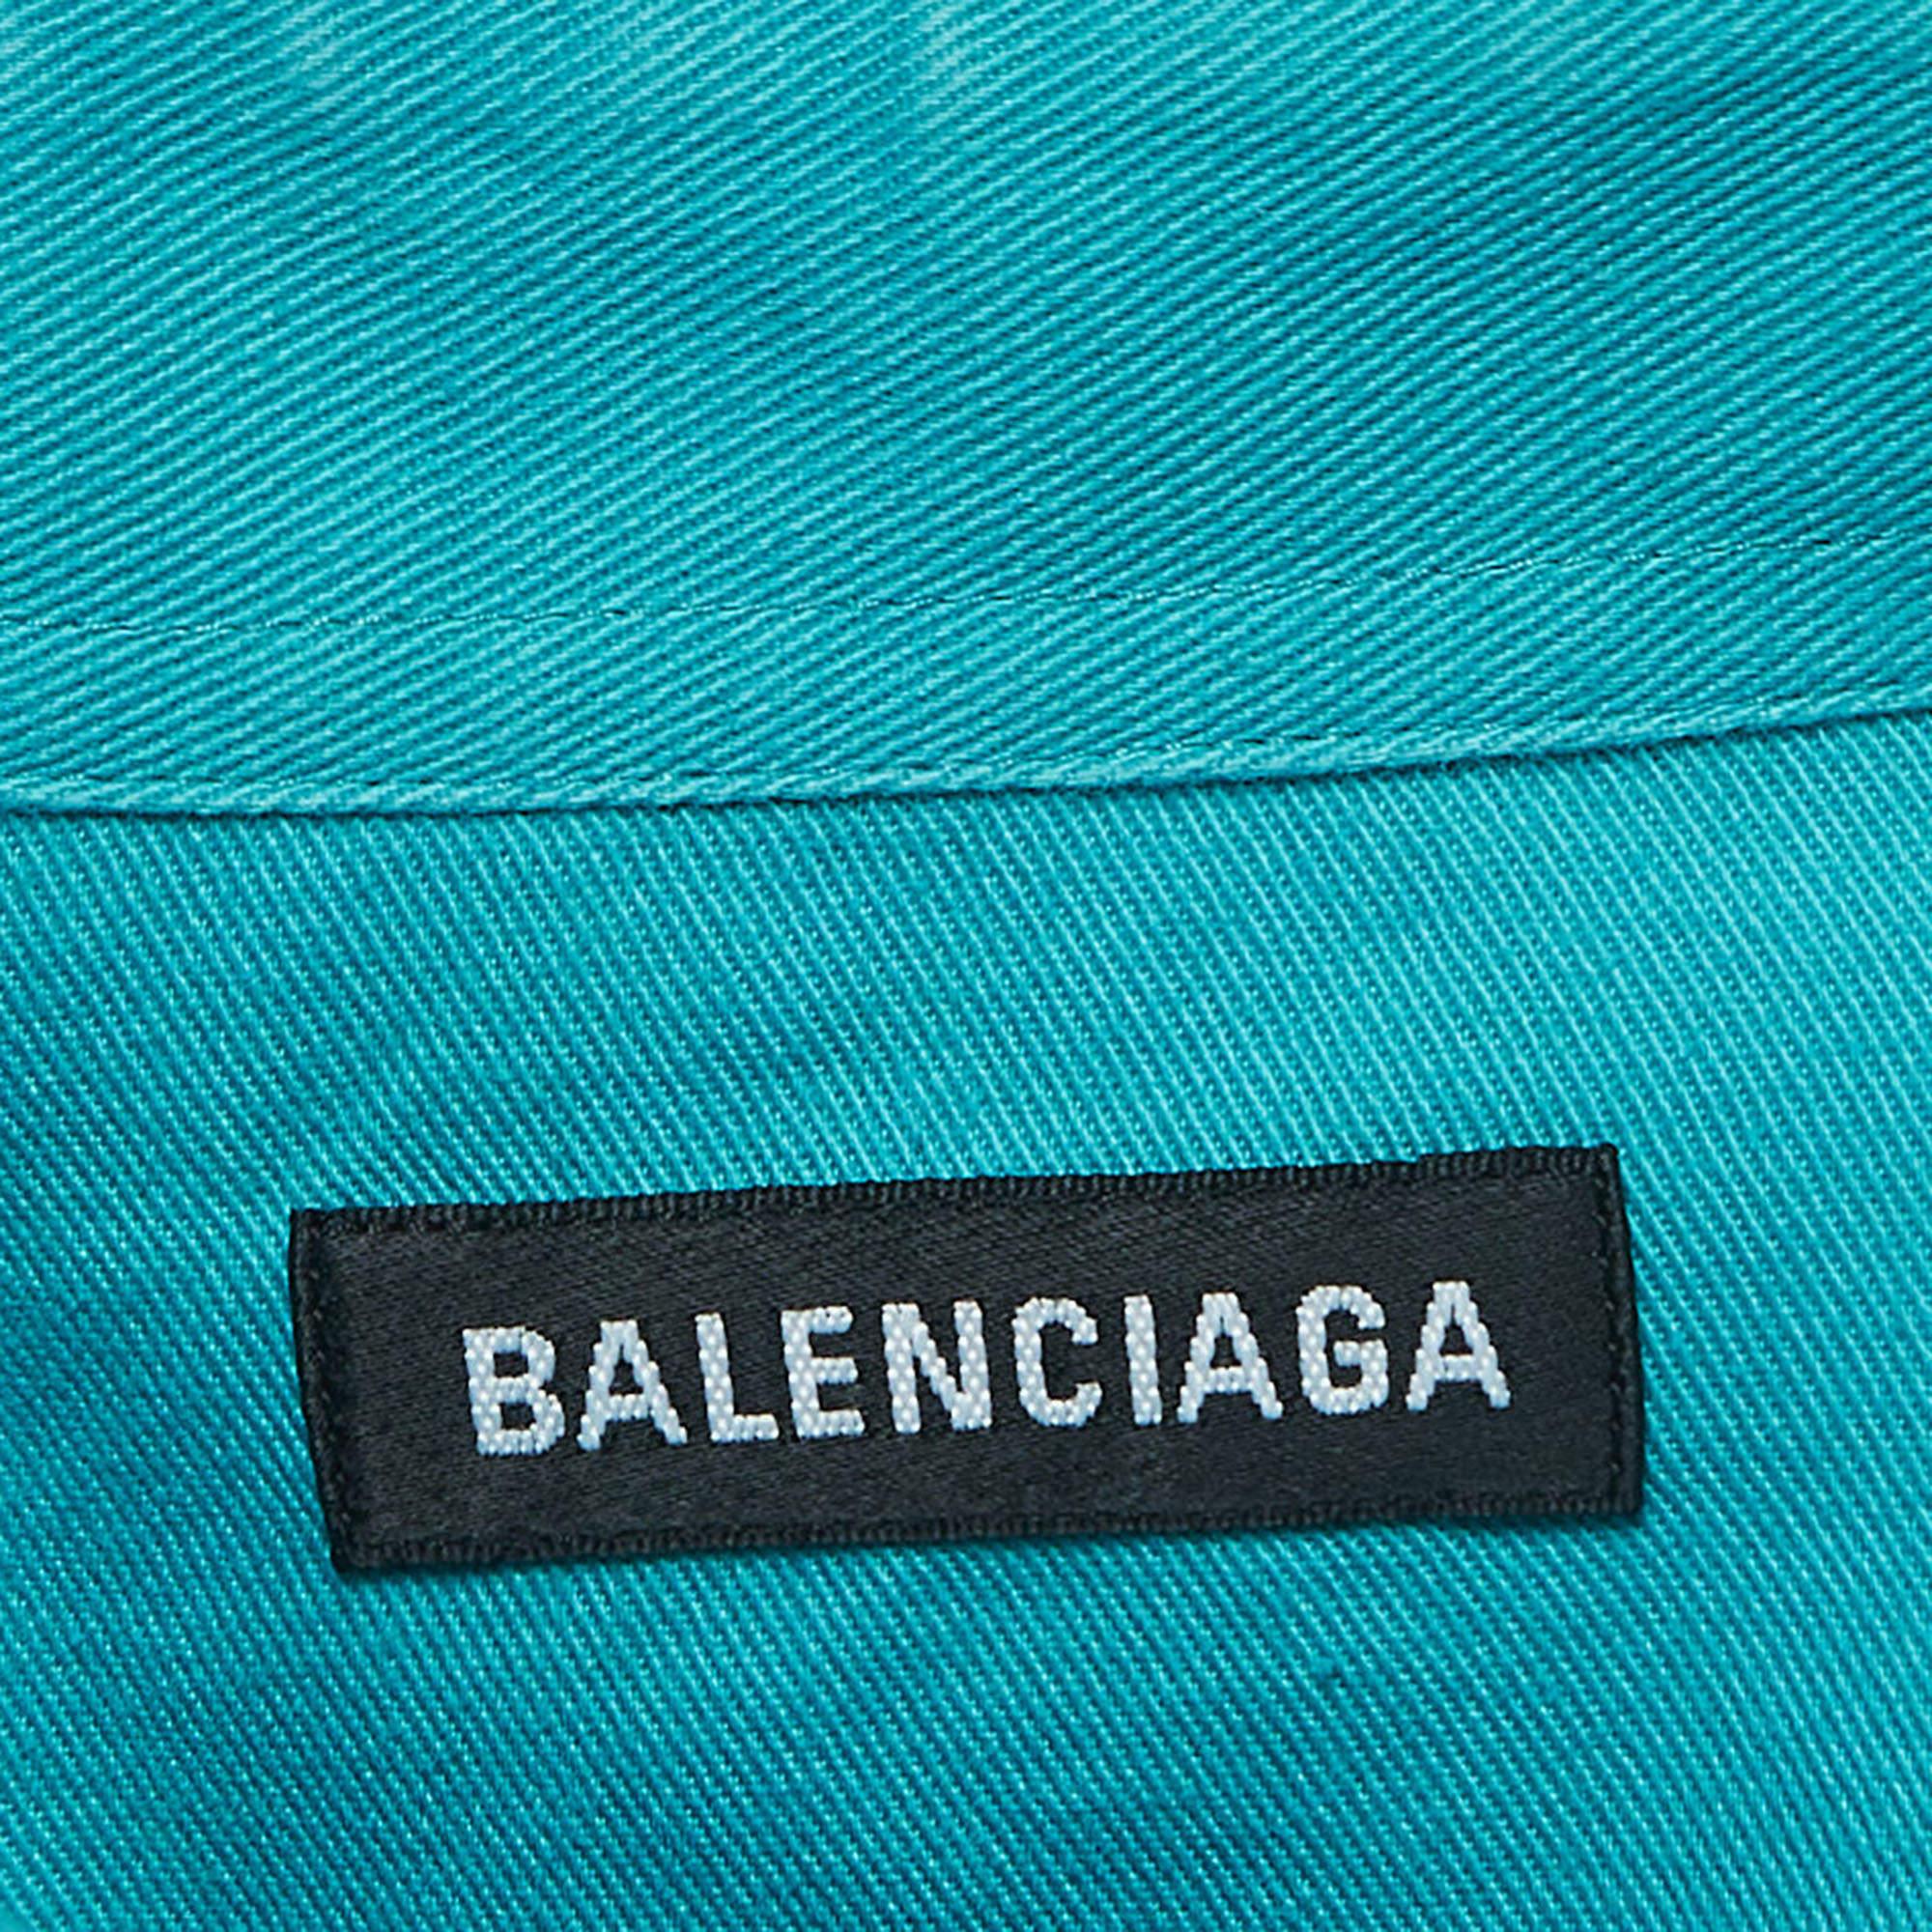 Balenciaga Teal Green Cotton Oversized Shirt XS For Sale 2